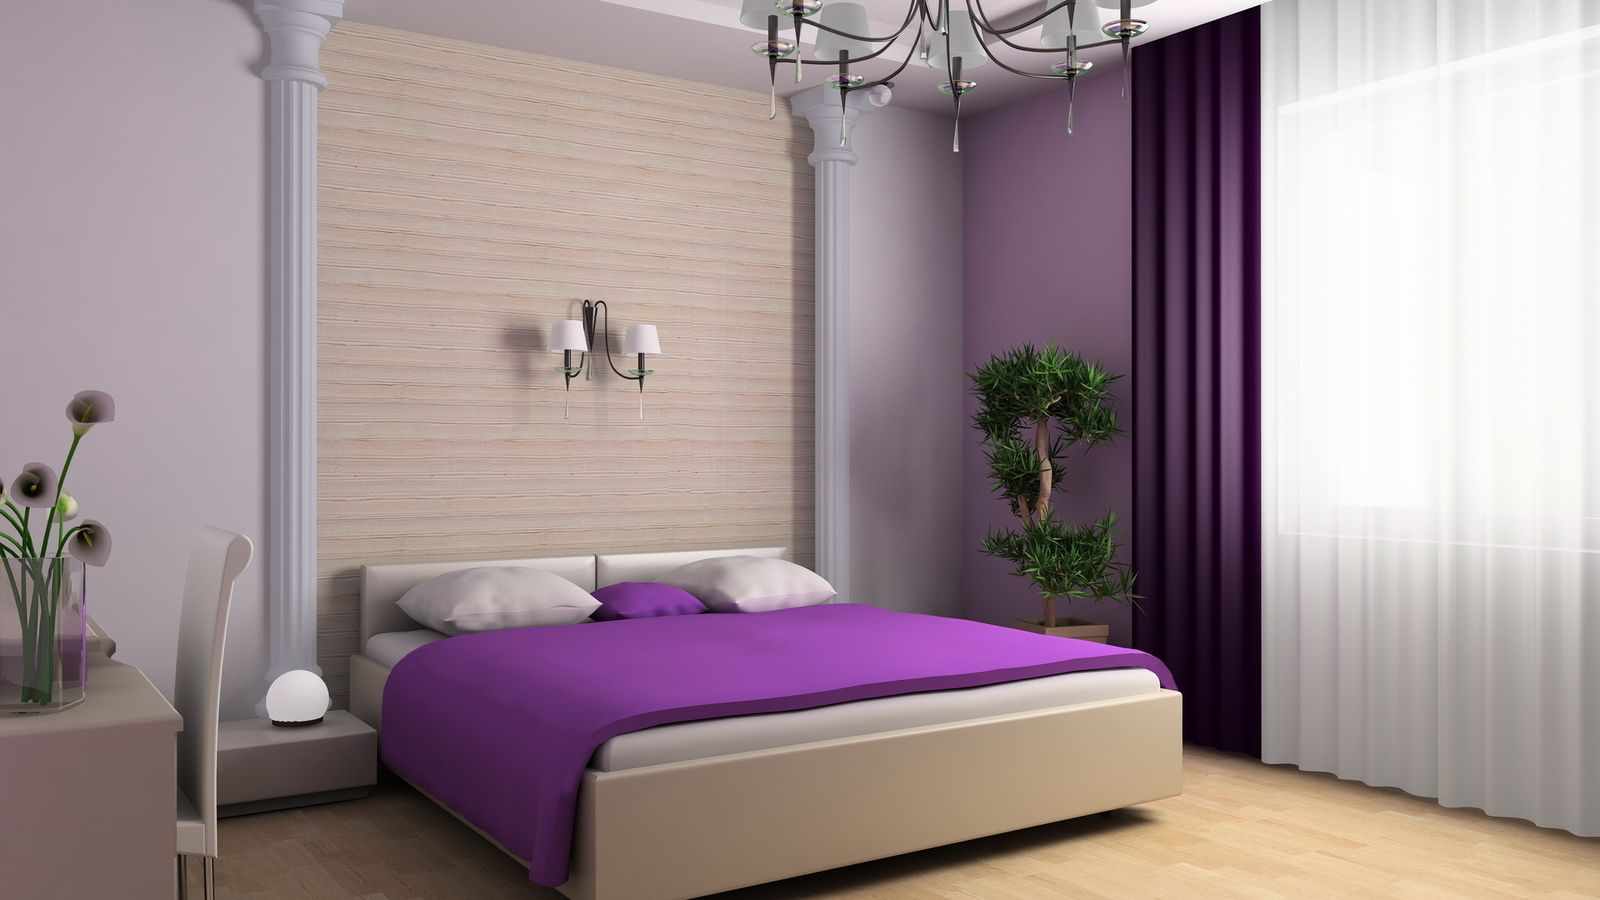 example of a bright bedroom interior